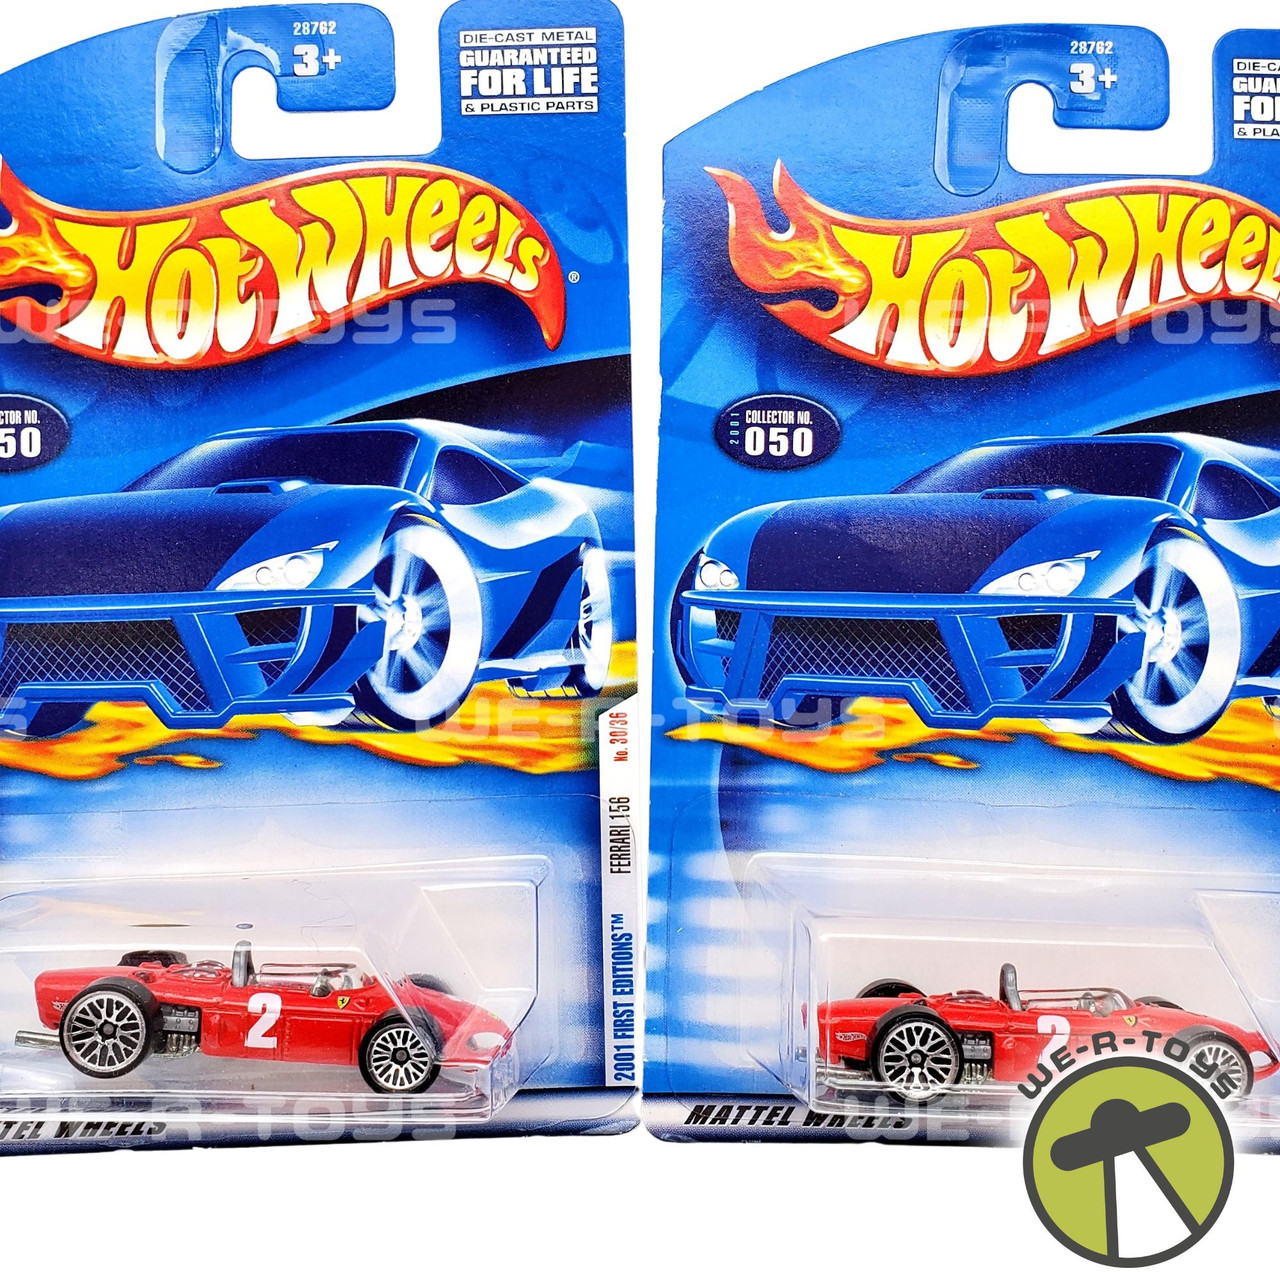 CAR RACING LOGO PATCH / PATCHES - Ferrari / Hotwheels / Cars